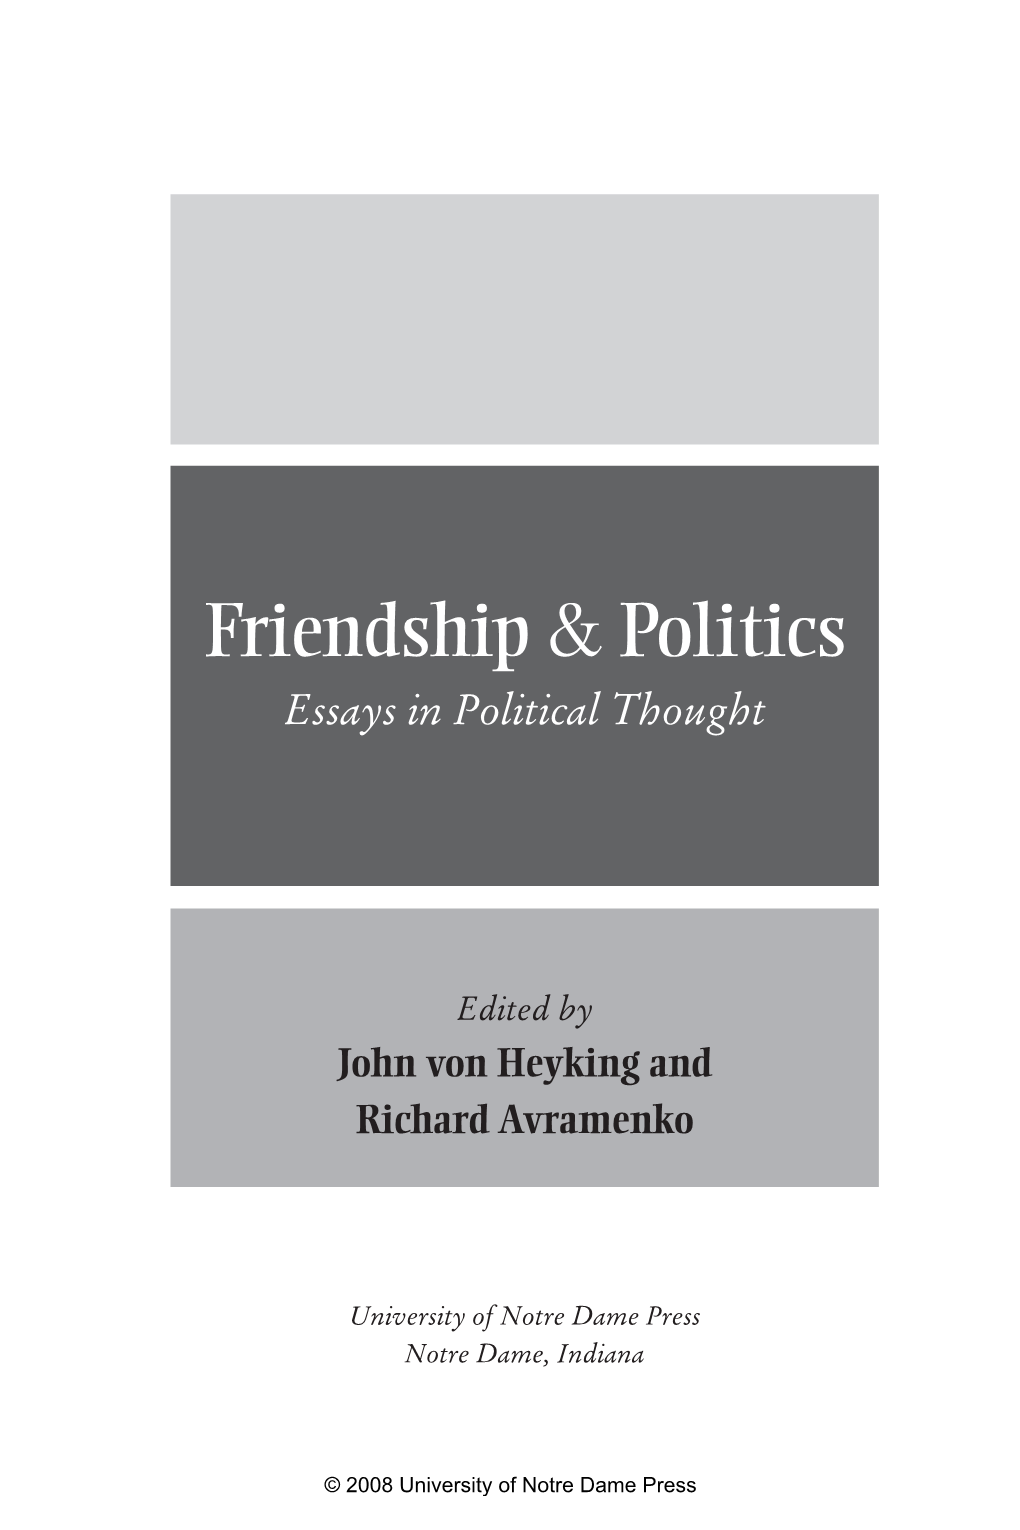 Friendship & Politics